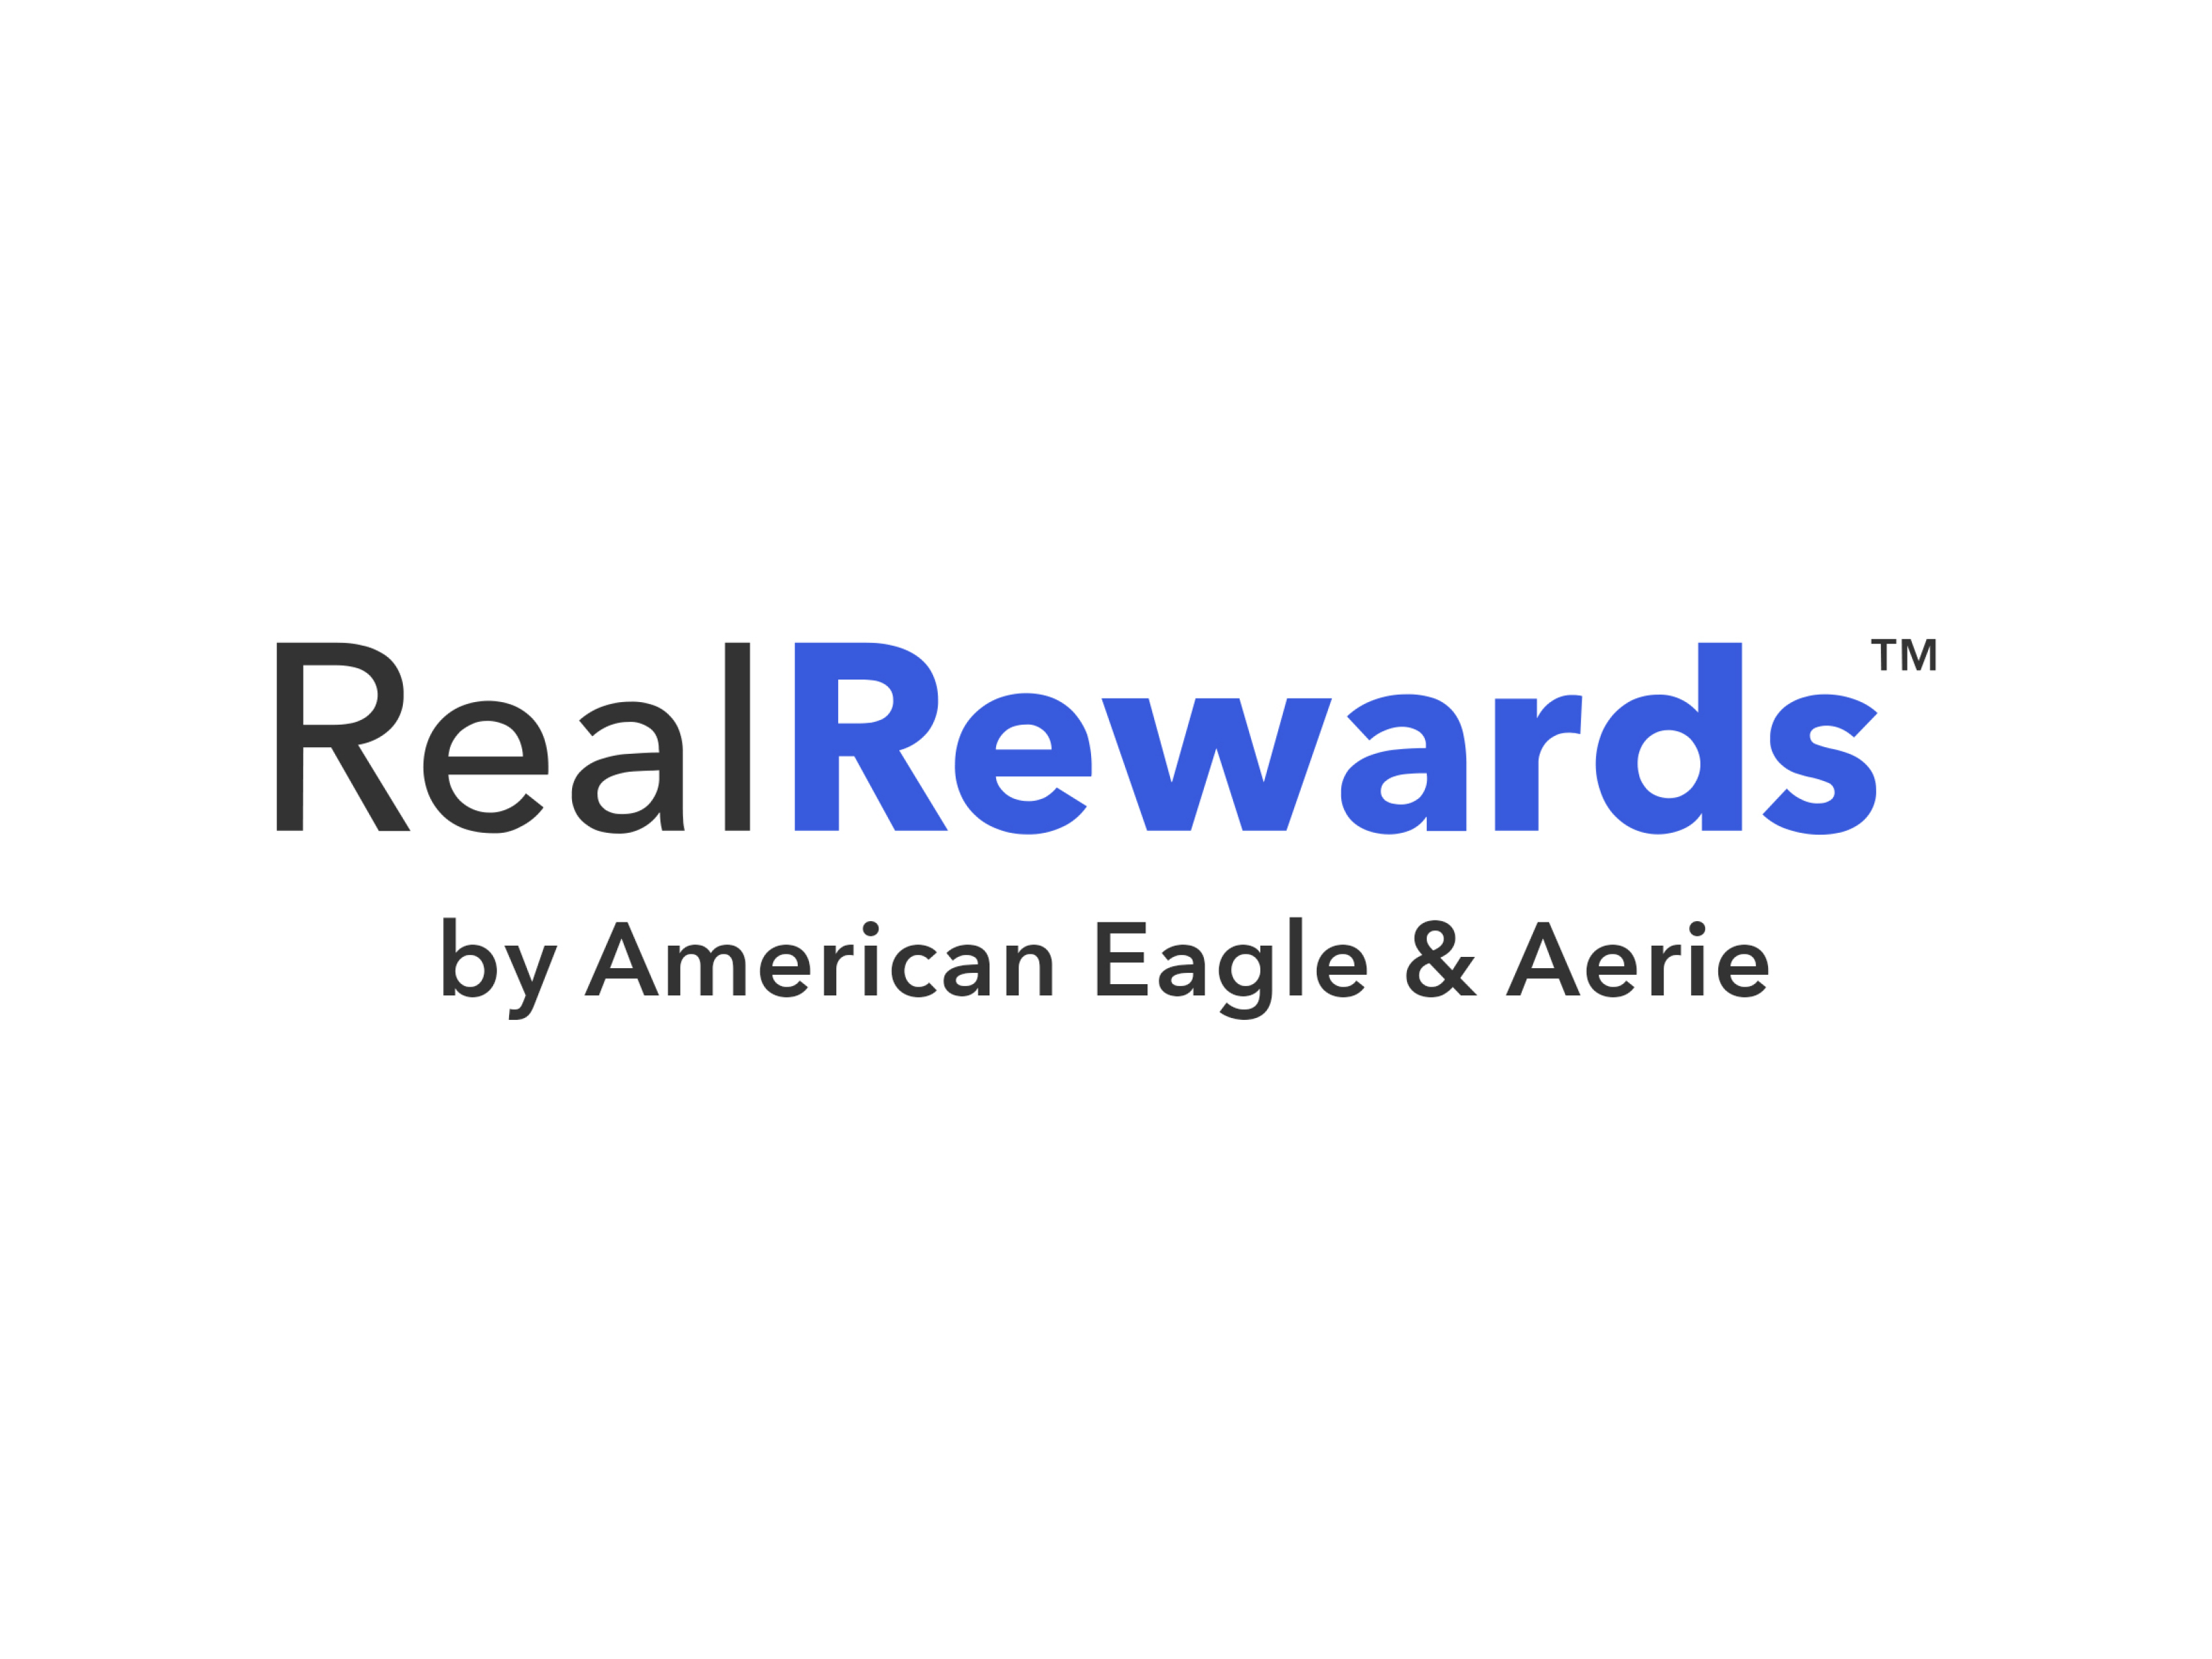 Real Reward